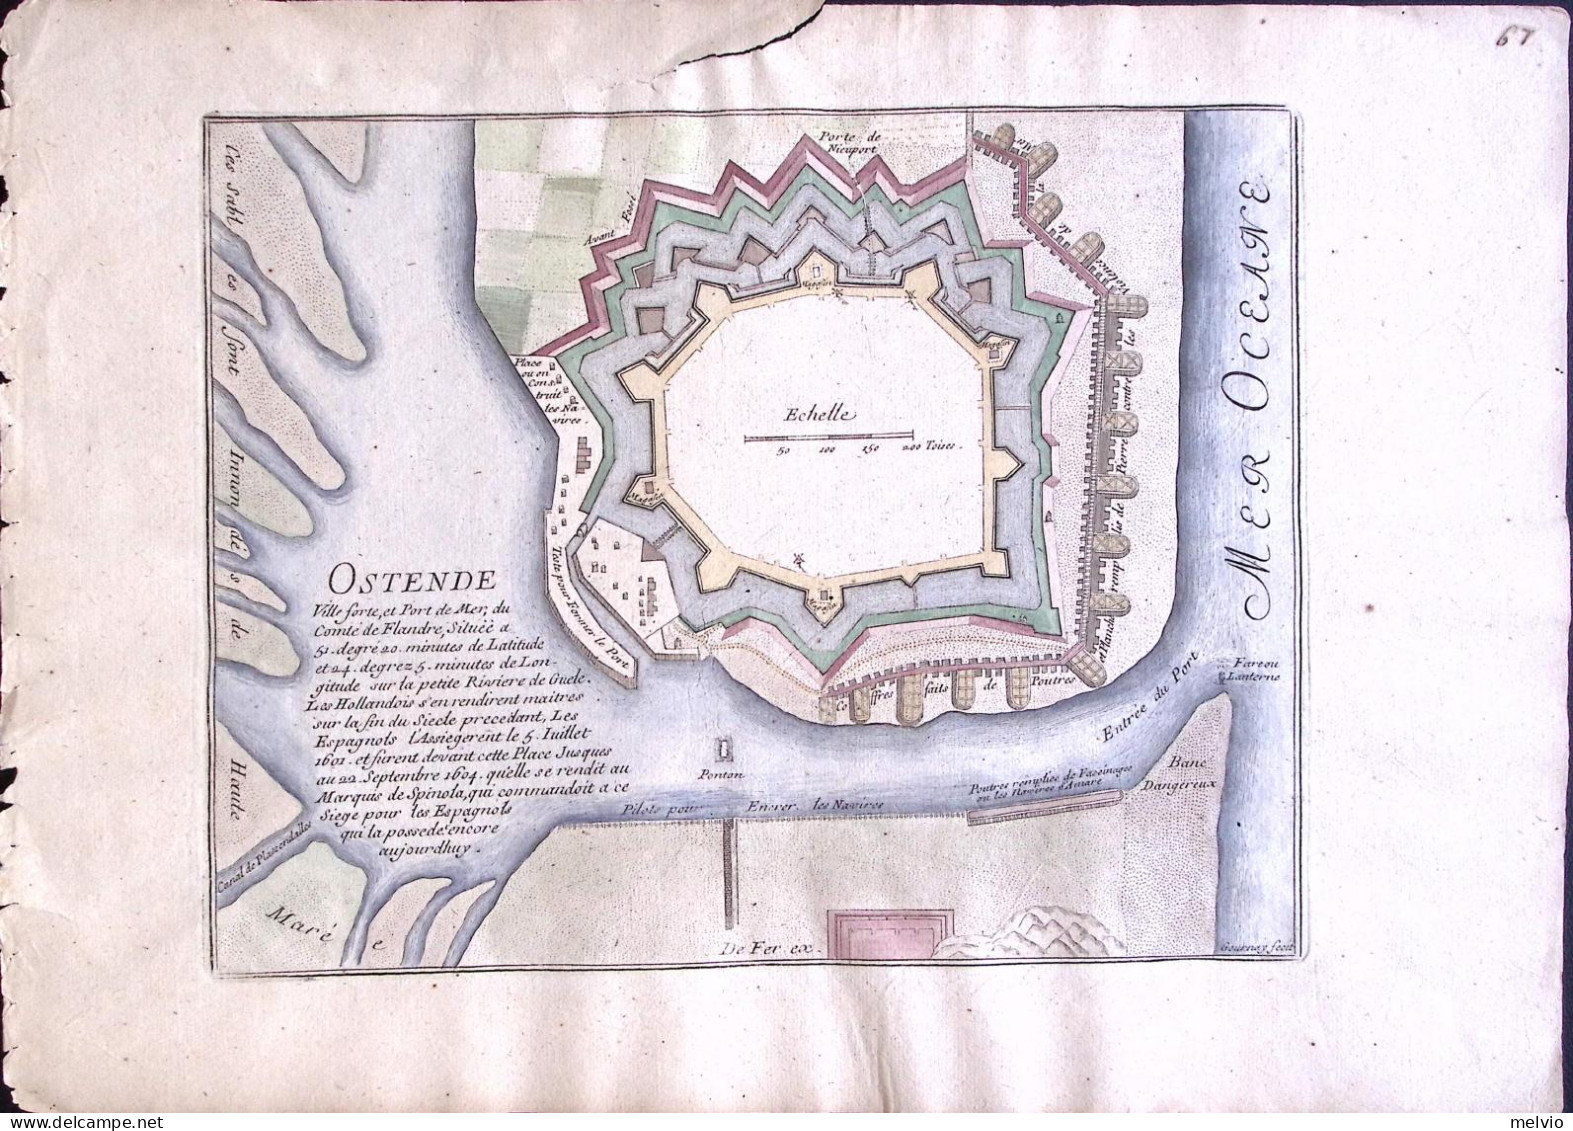 1695-Nicolas De Fer "Ostende Ville Forte, Et Port De Mer, Du Comte De Flandre"tr - Geographische Kaarten